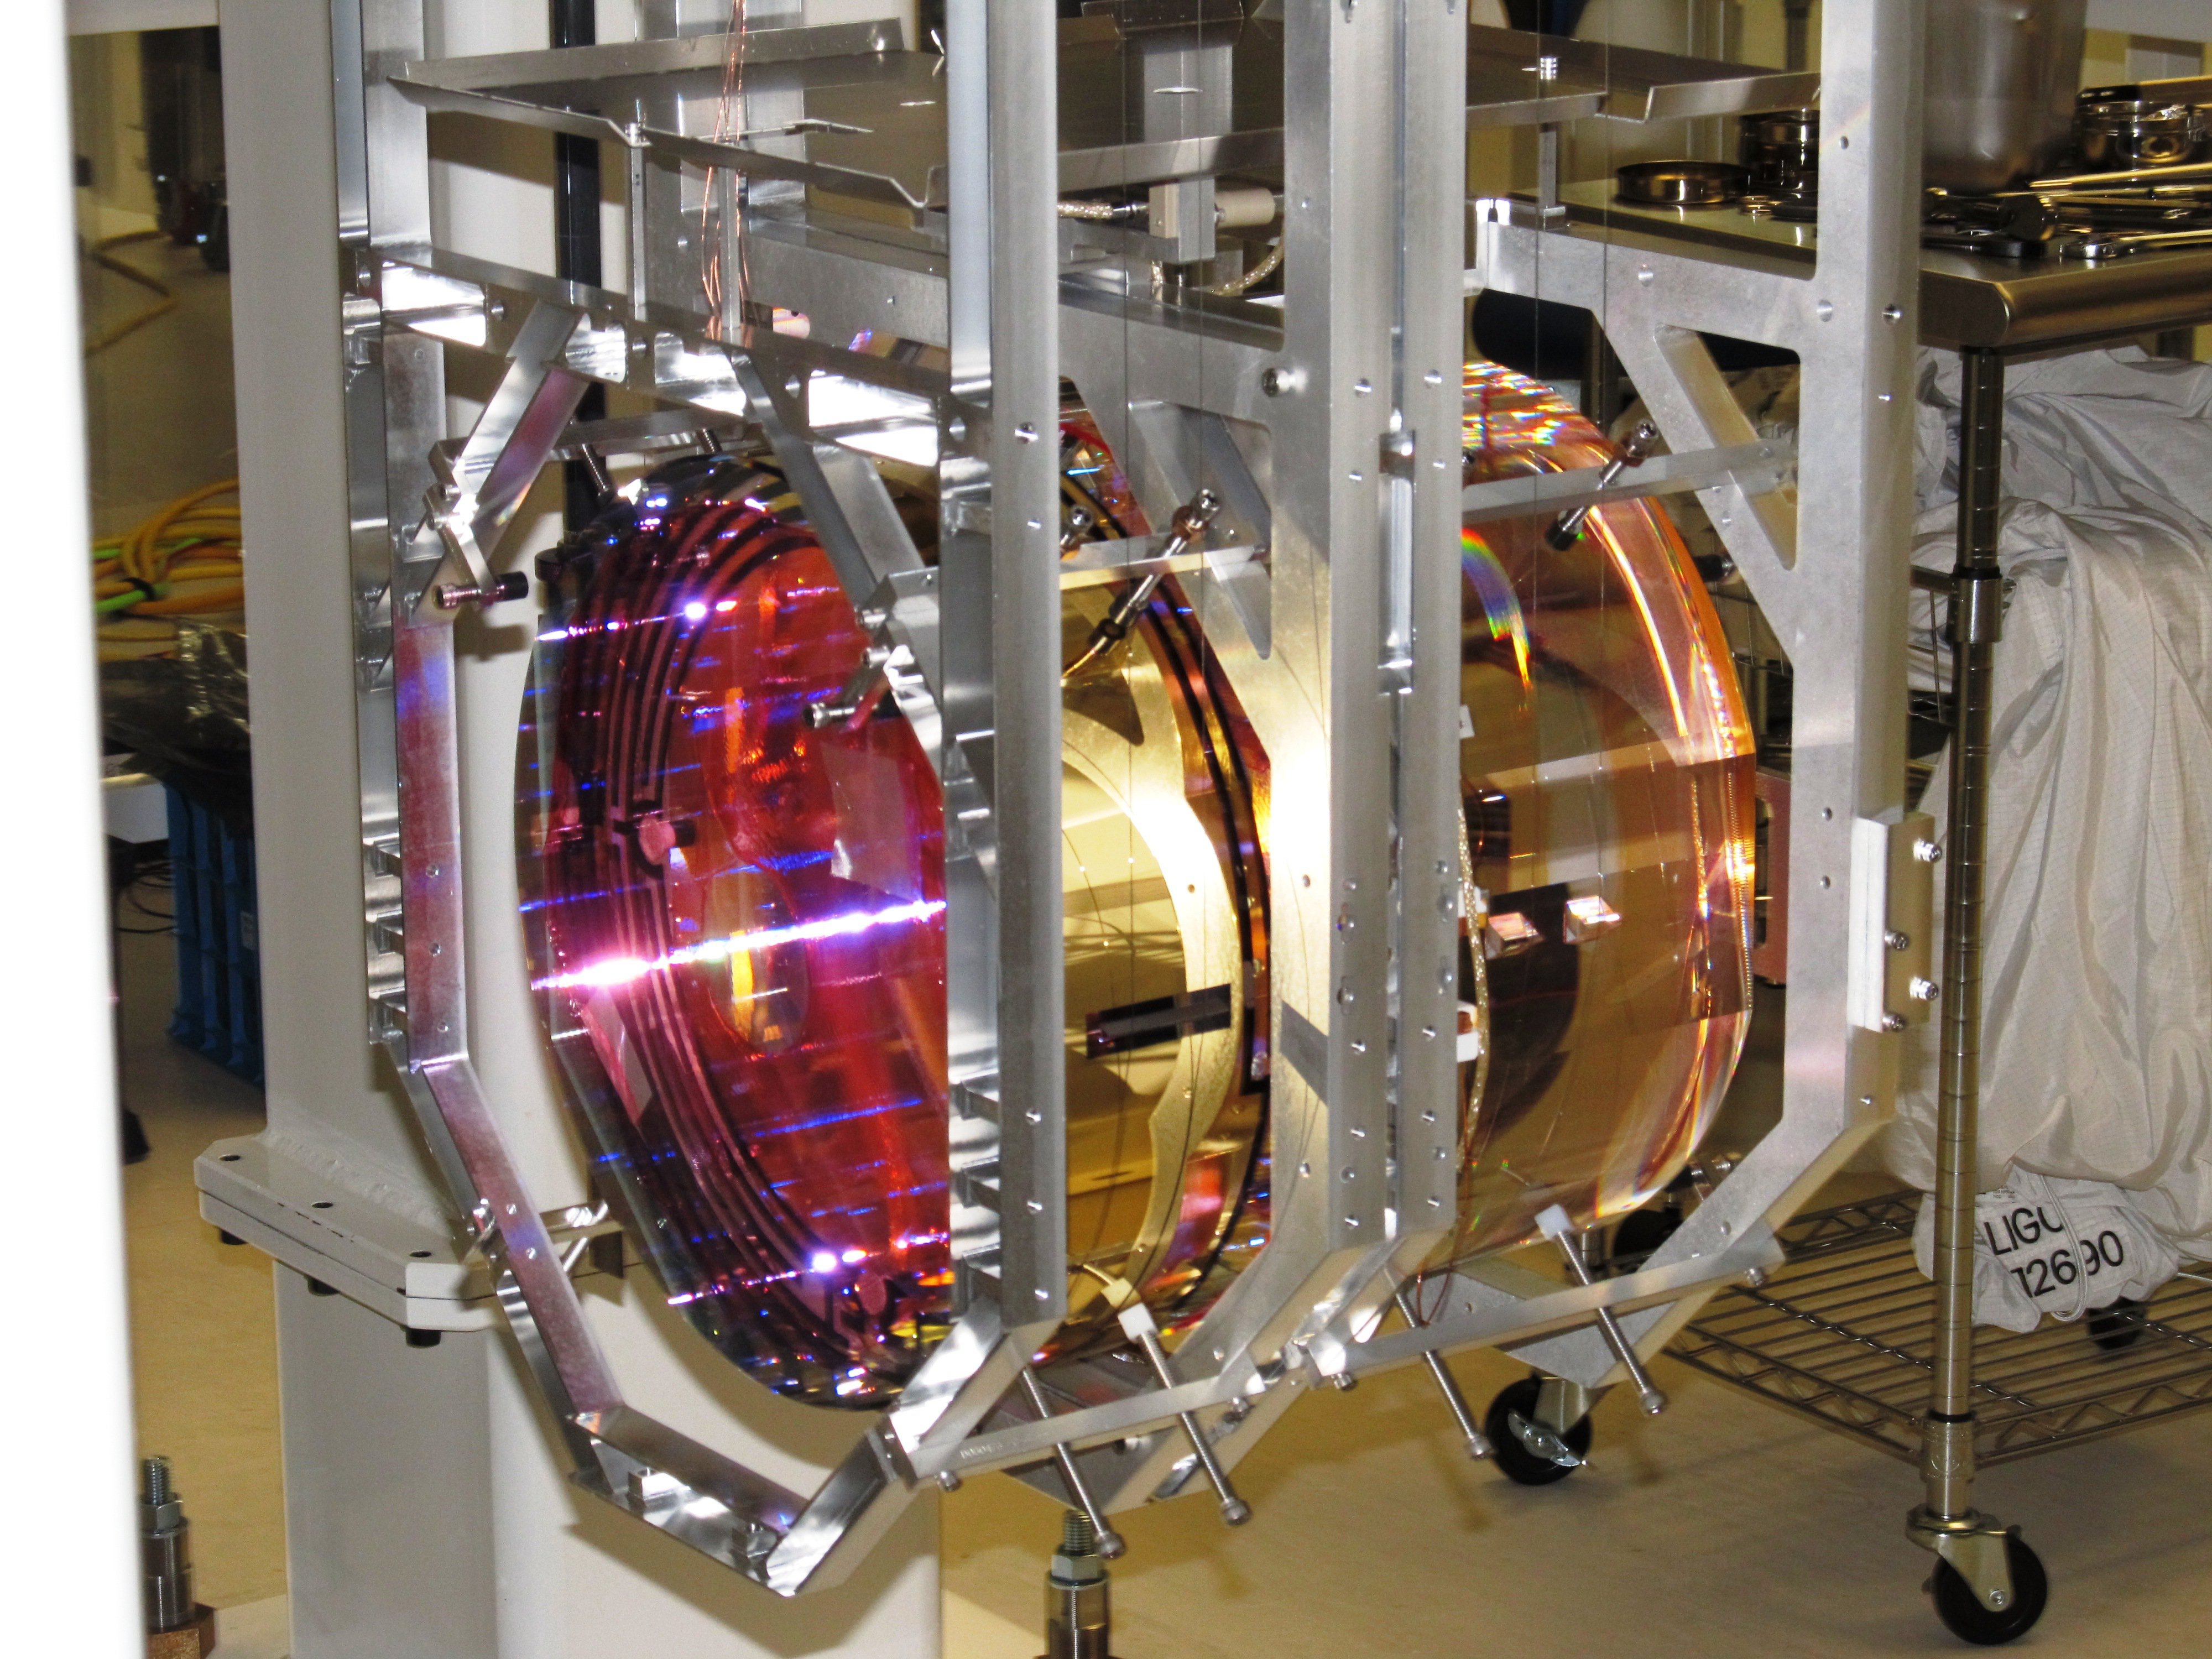 One of the mirrors of an Advanced LIGO interferometer (Photo courtesy of Caltech/MIT/LIGO Laboratory)